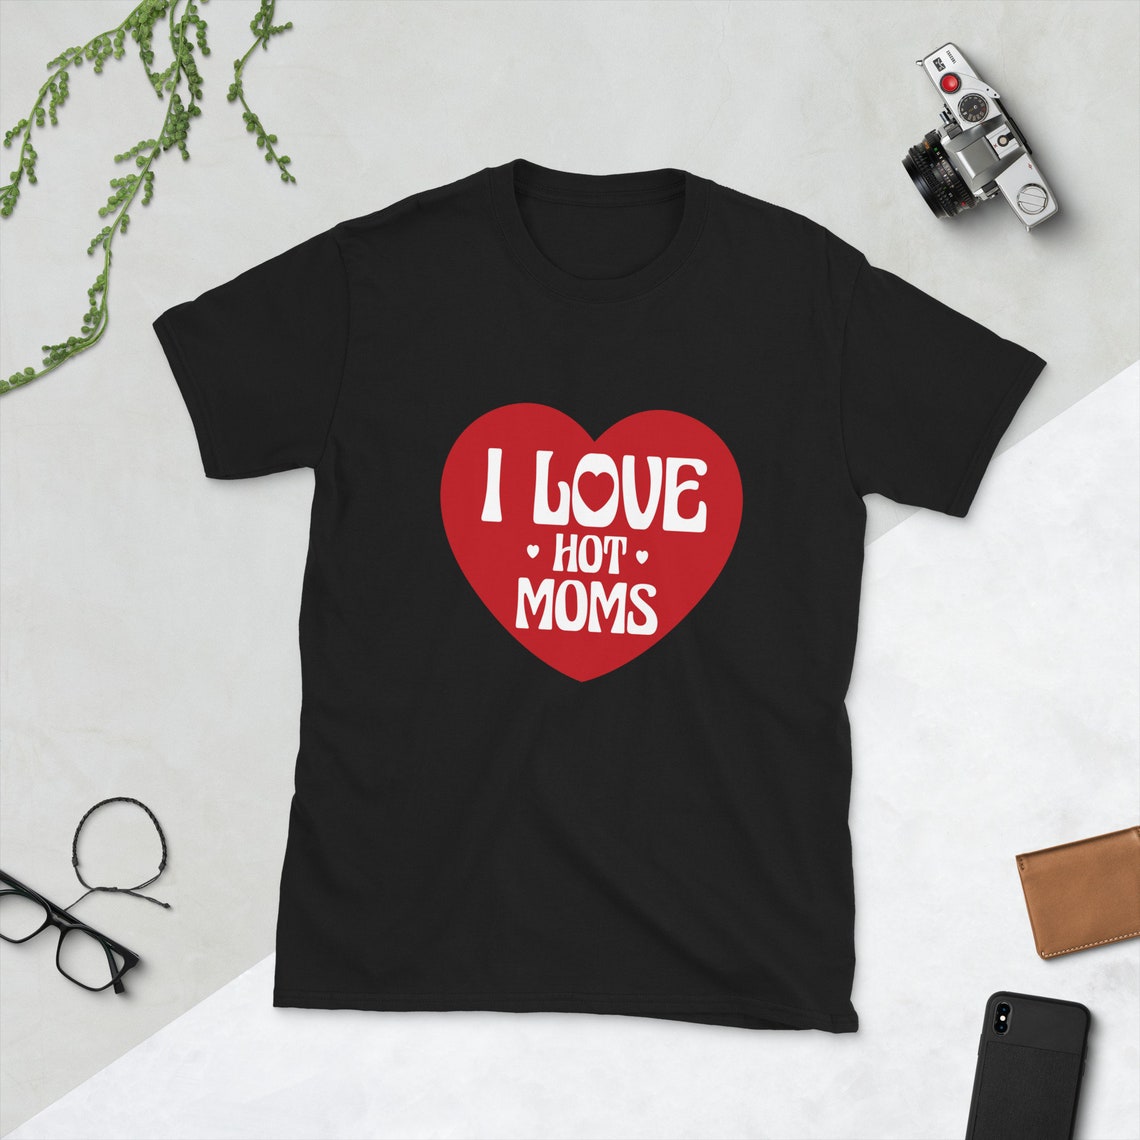 I Love Hot Moms Adult Unisex Crewneck Shirt, Funny Gift Shirt